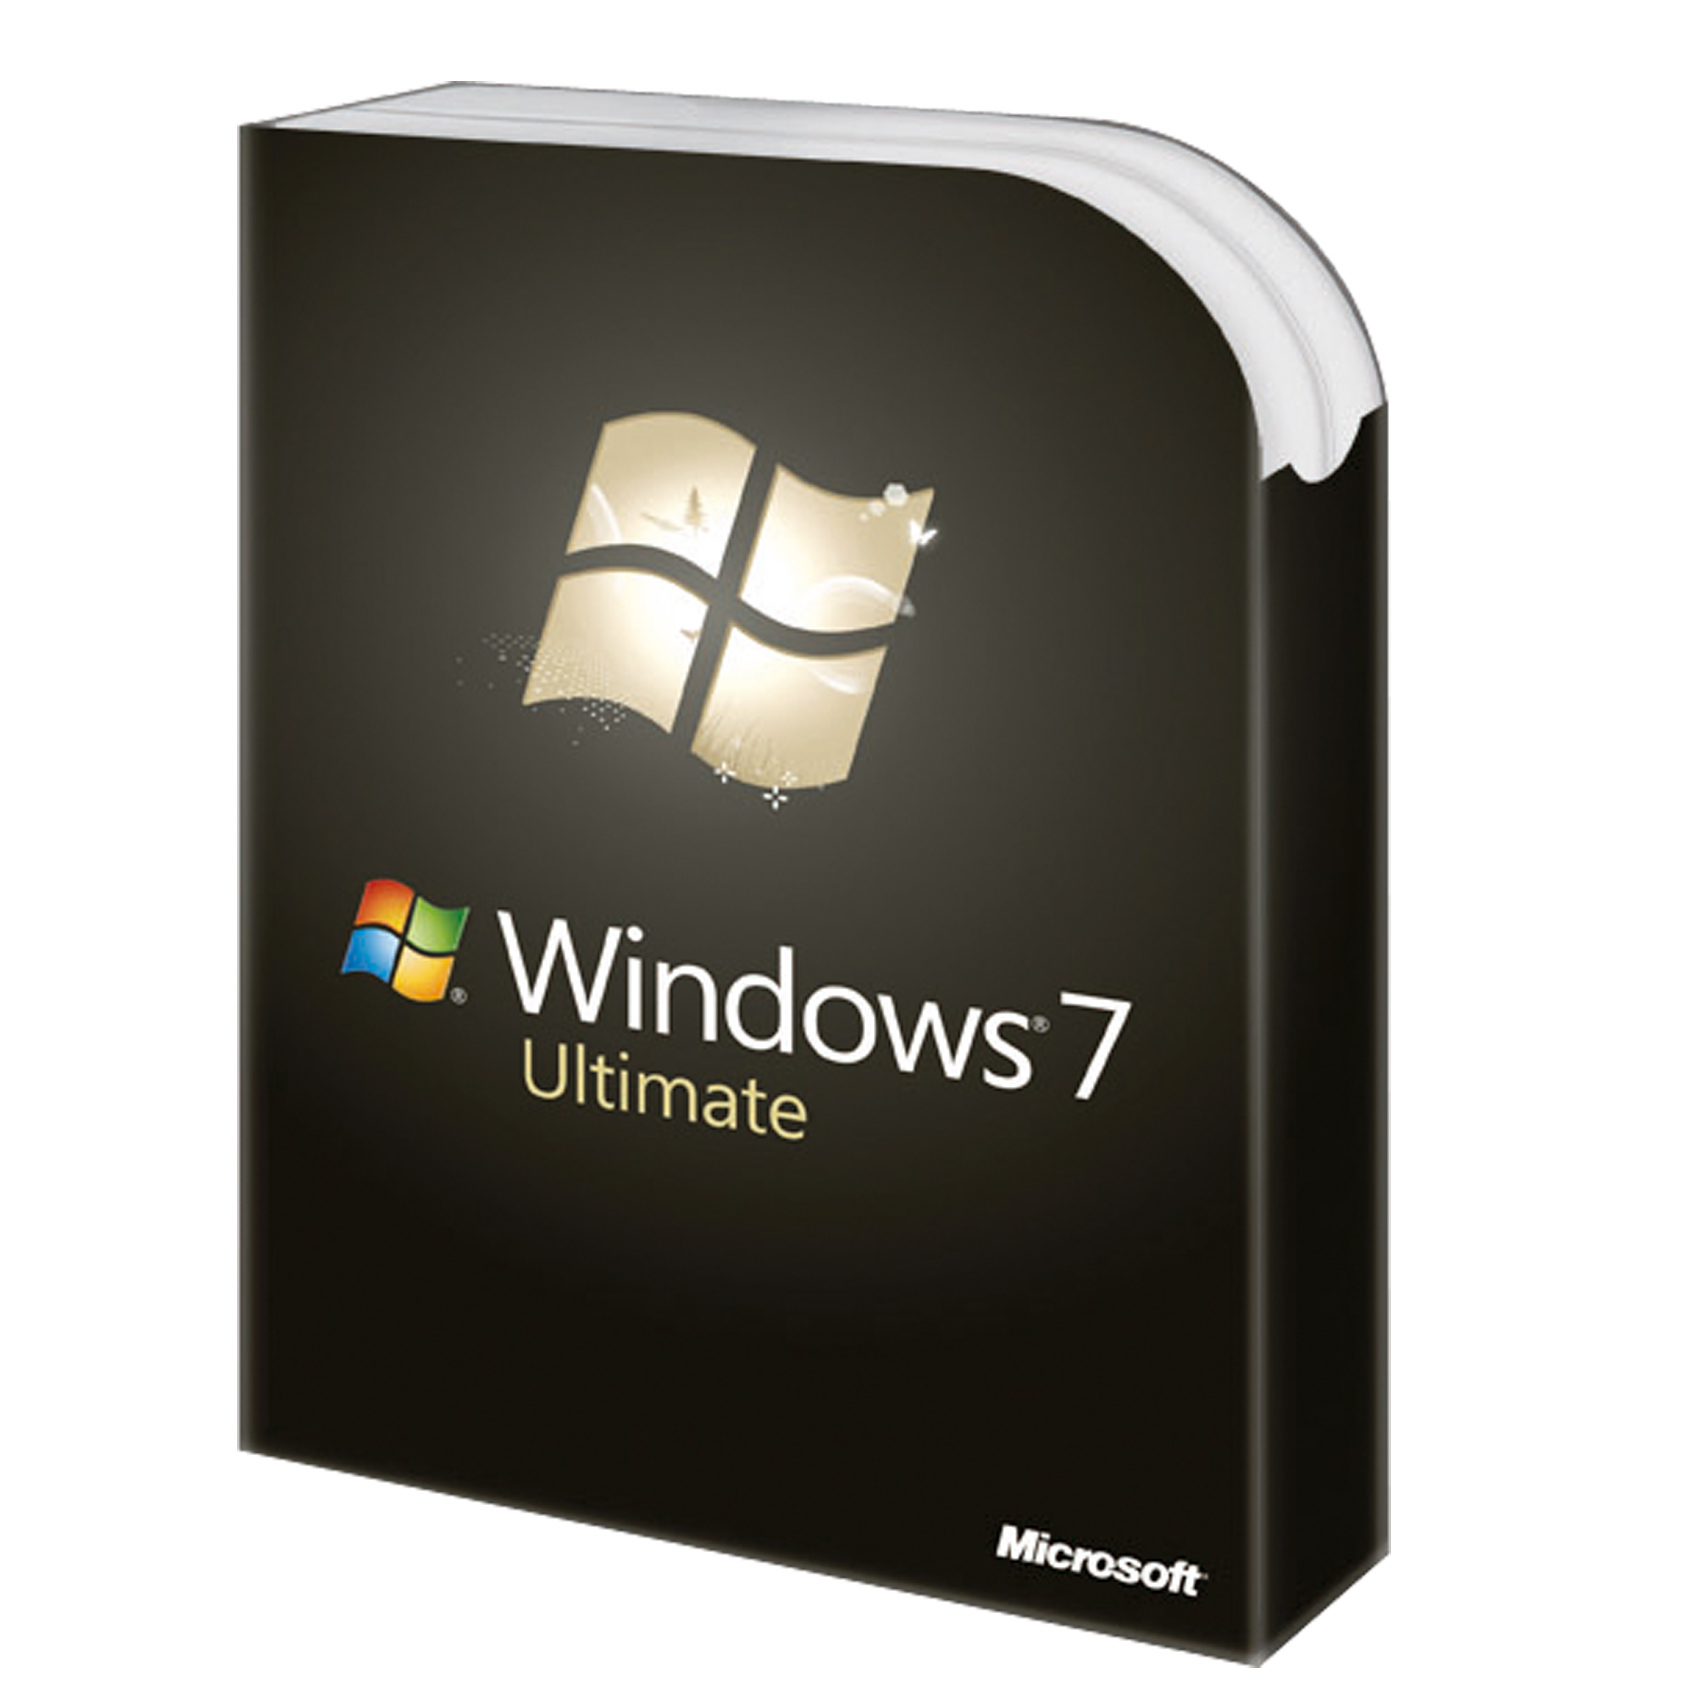 Download Windows 7 Ultimate Final Full Version 64 bit iso